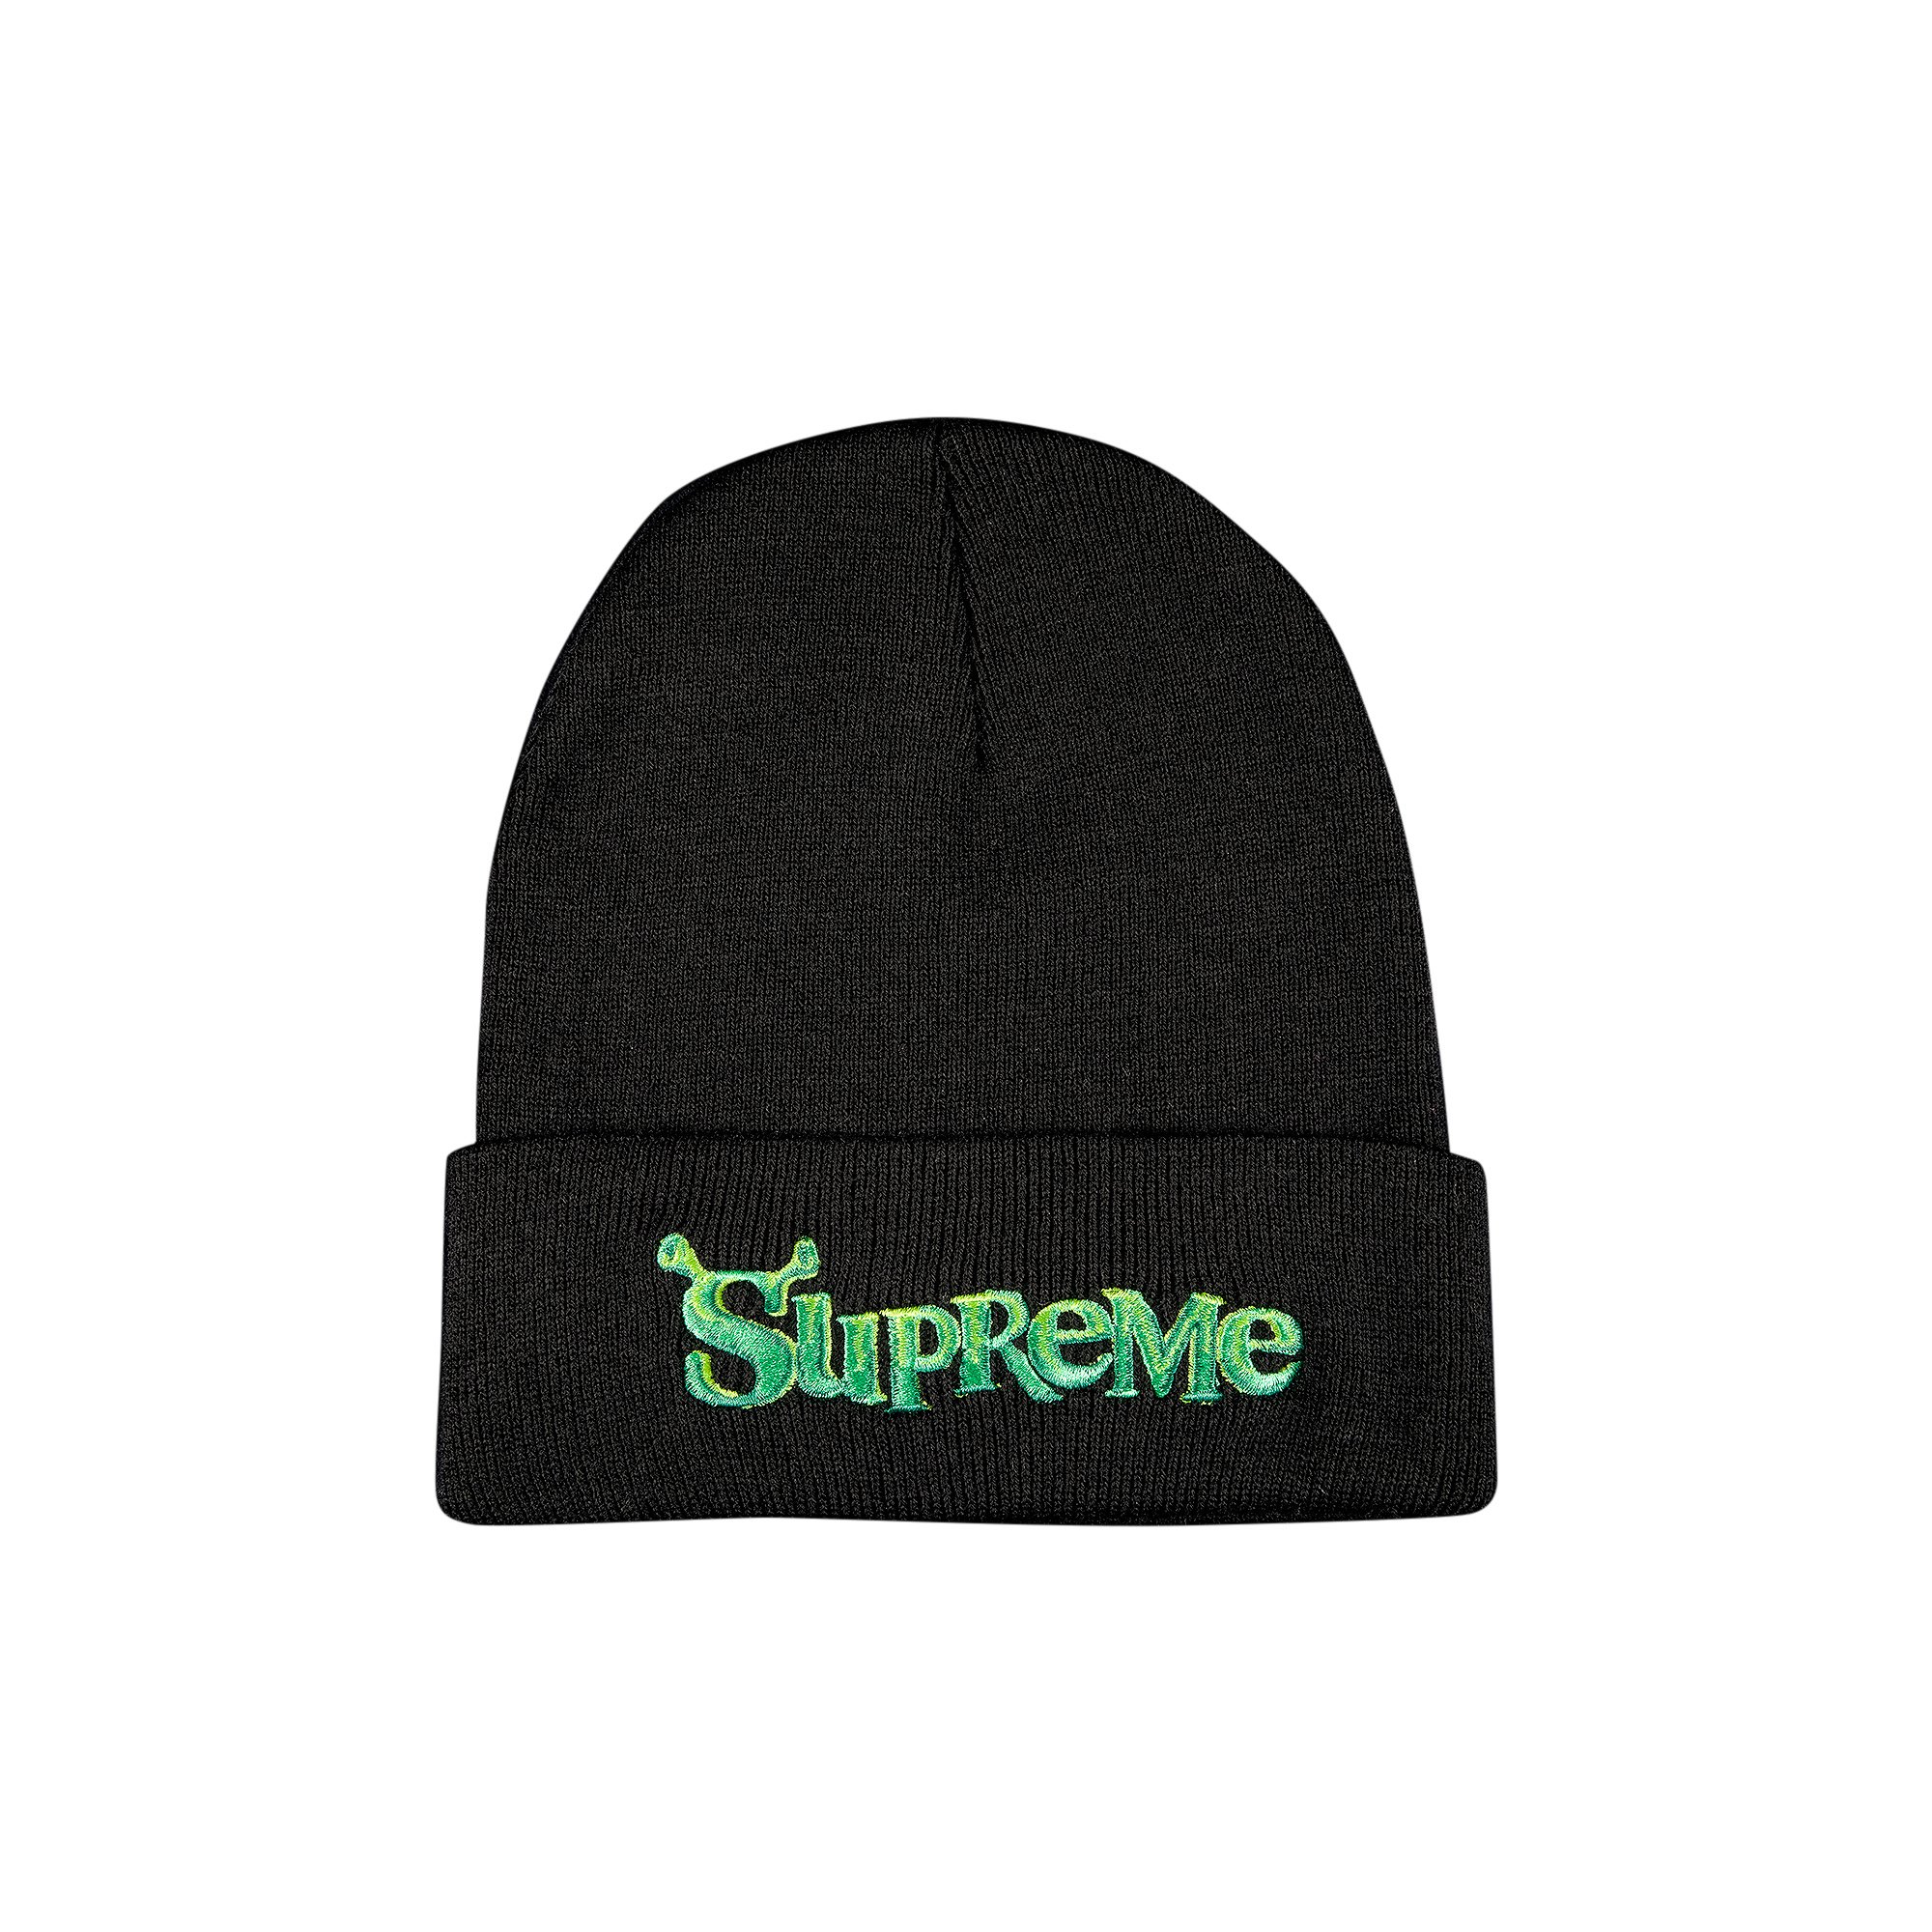 Buy Supreme Shrek Beanie 'Black'   FWBN BLACK   GOAT